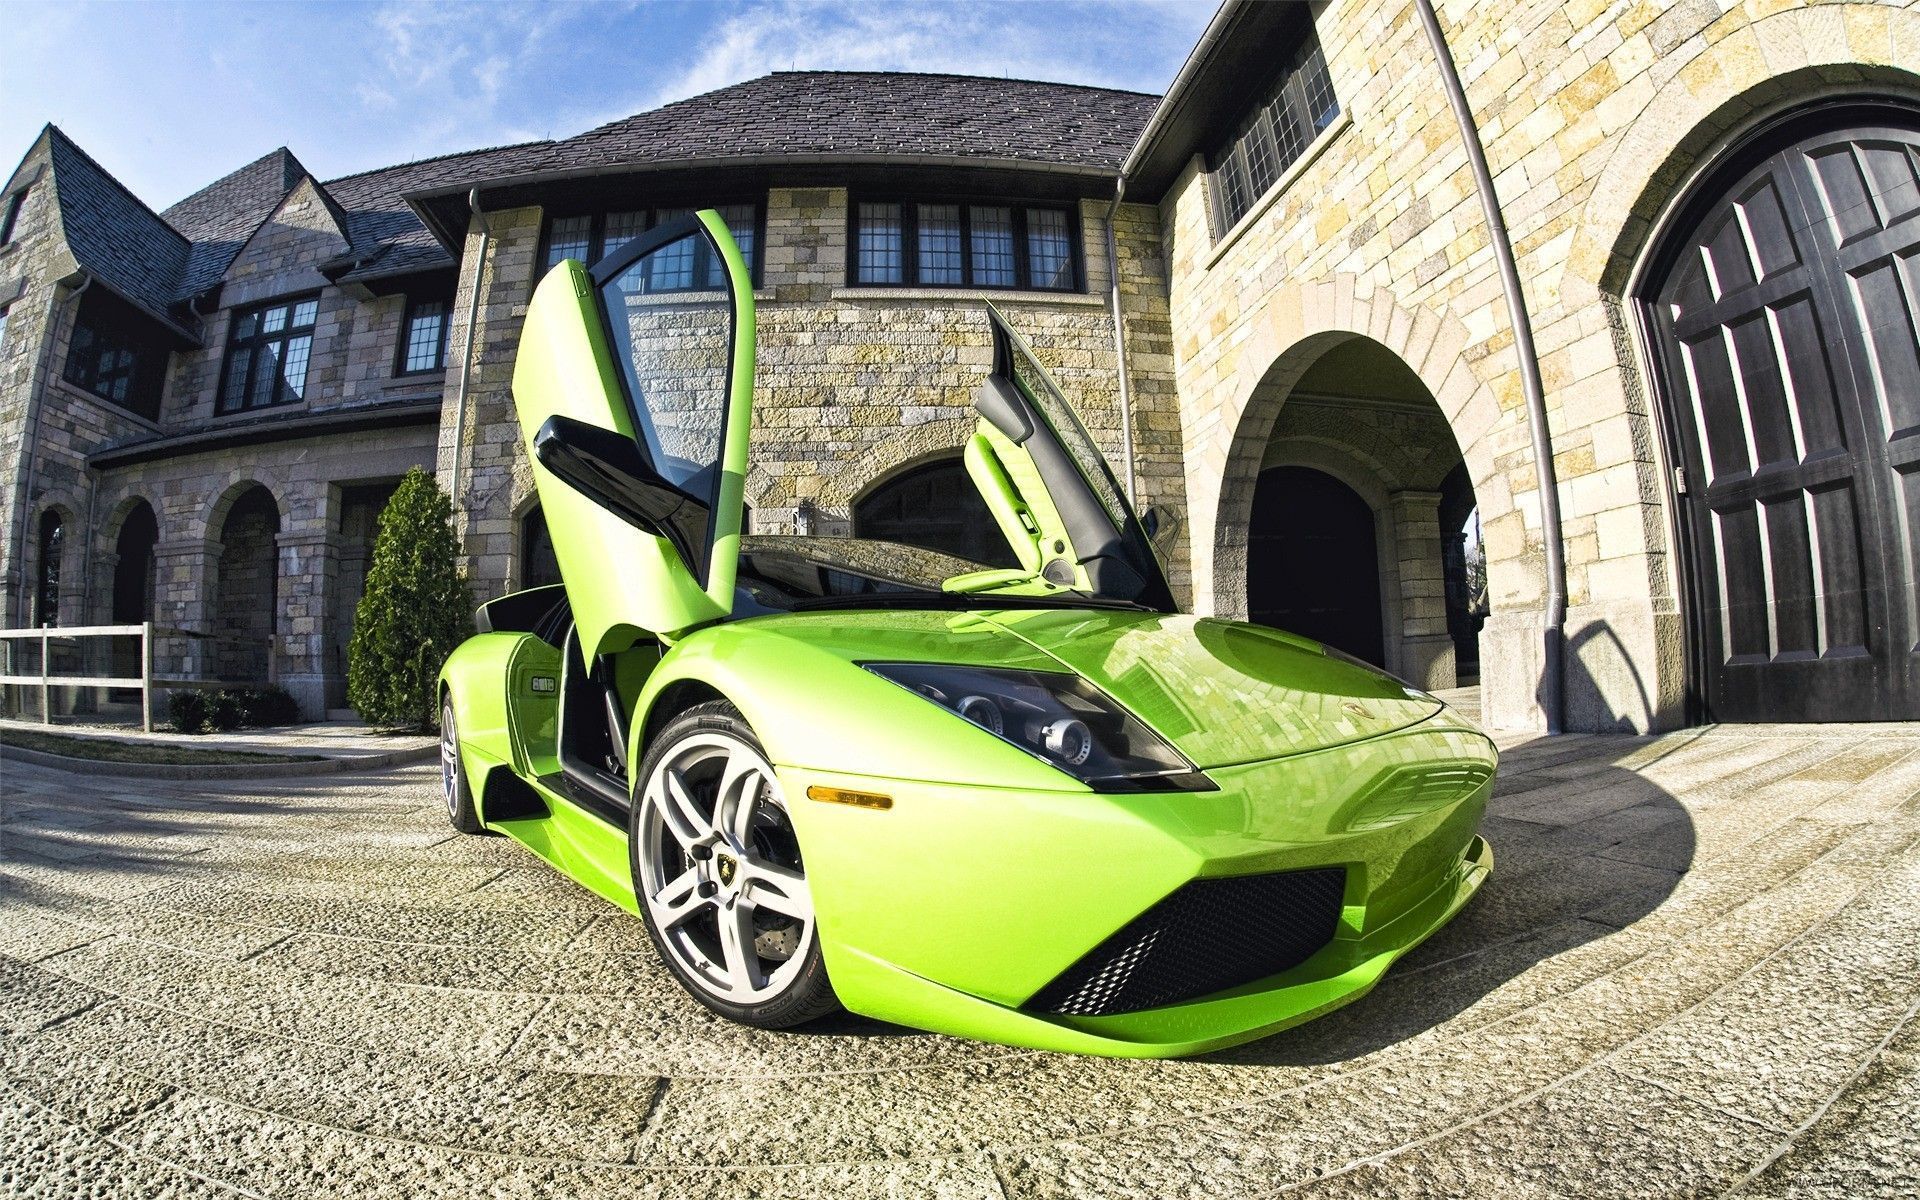 Wallpaper Cars – Lamborghini | Desktop Wallpapers, Pictures, Themes